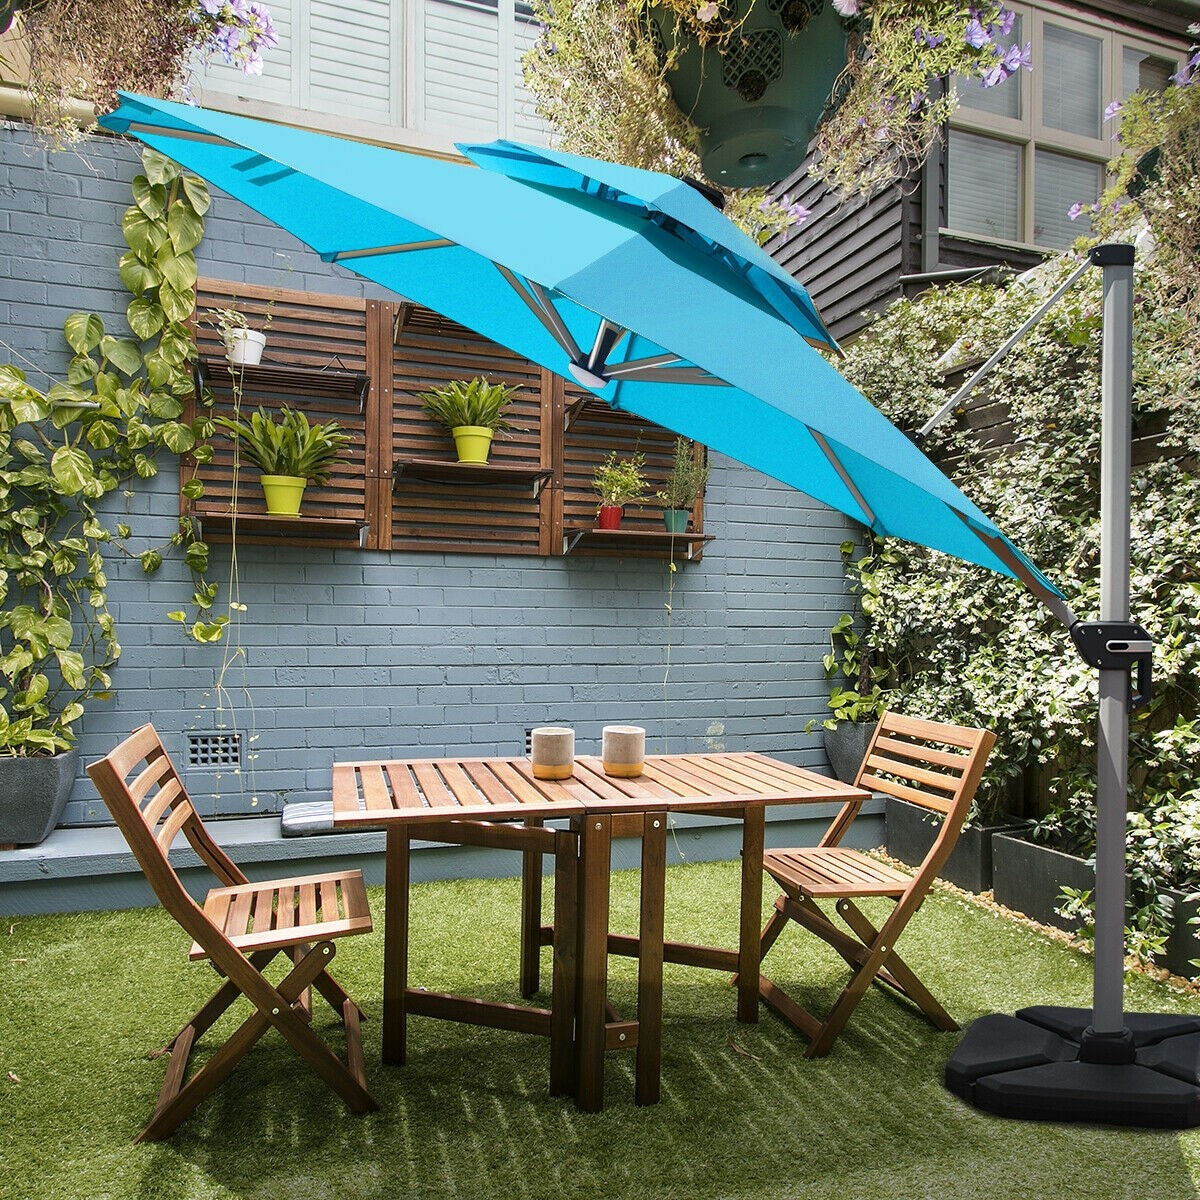 Outdoor Umbrellas & Sunshades